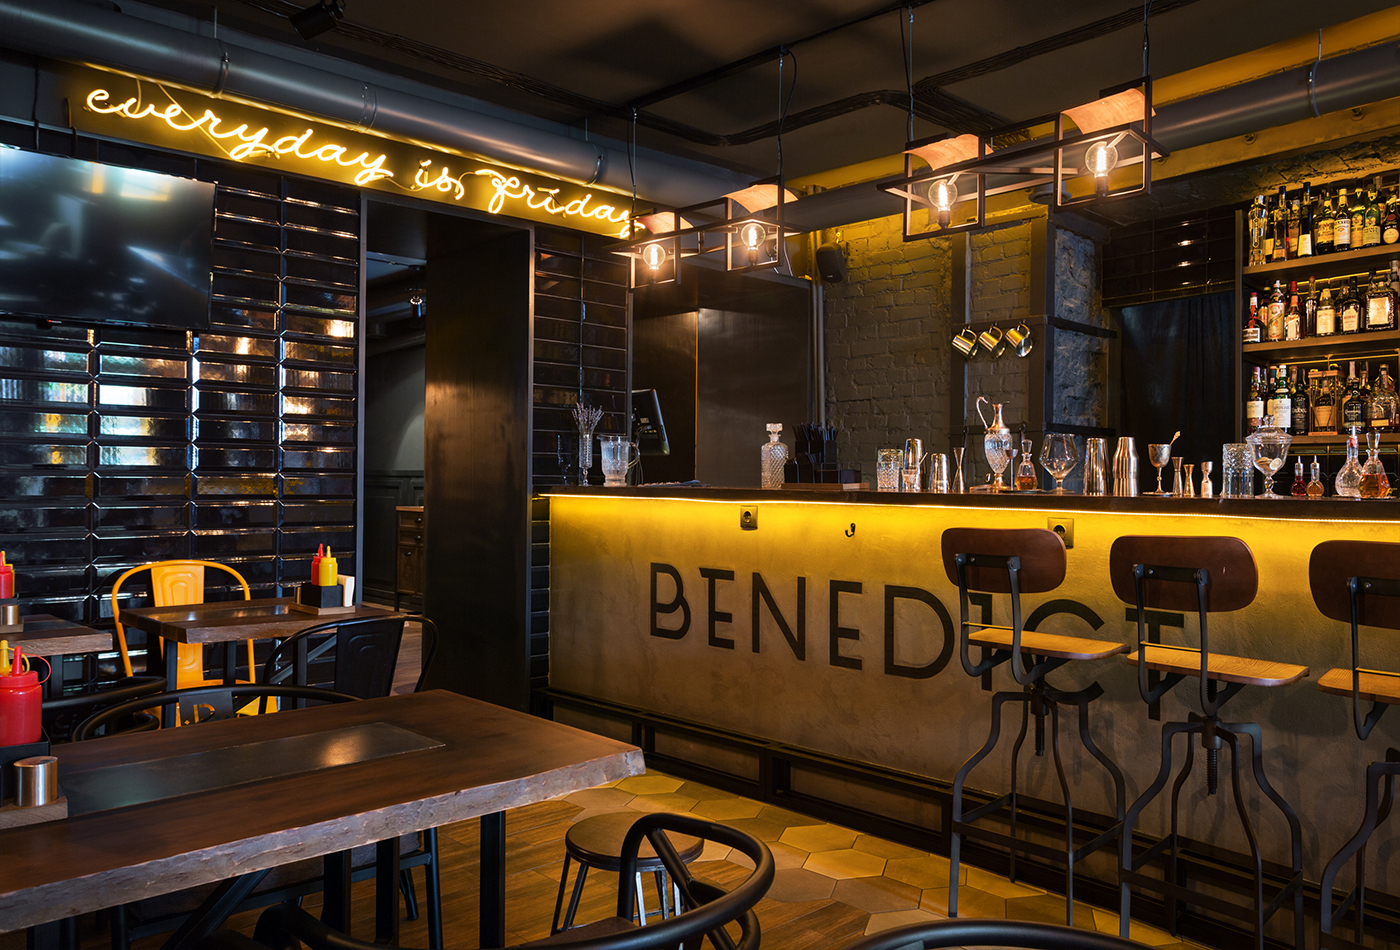 TheGoort Interior design commercial design bar cocktail benedict branding  identity